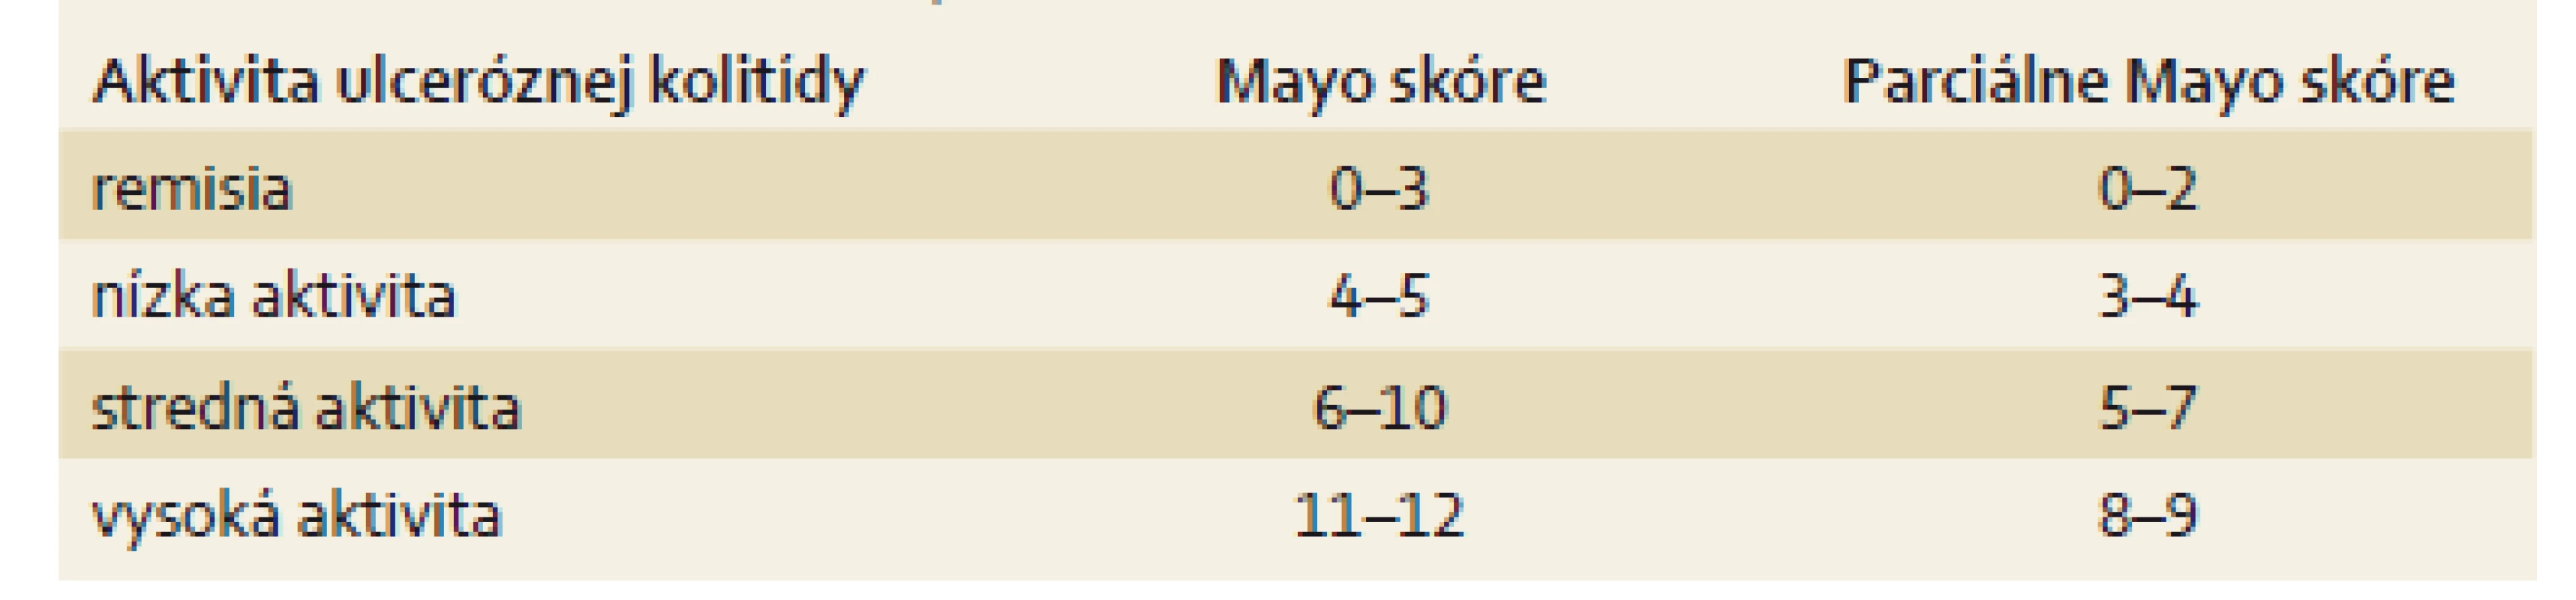 Hodnotenie výsledku Mayo skóre.
Tab.4. Evaluation of the Mayo Score results.